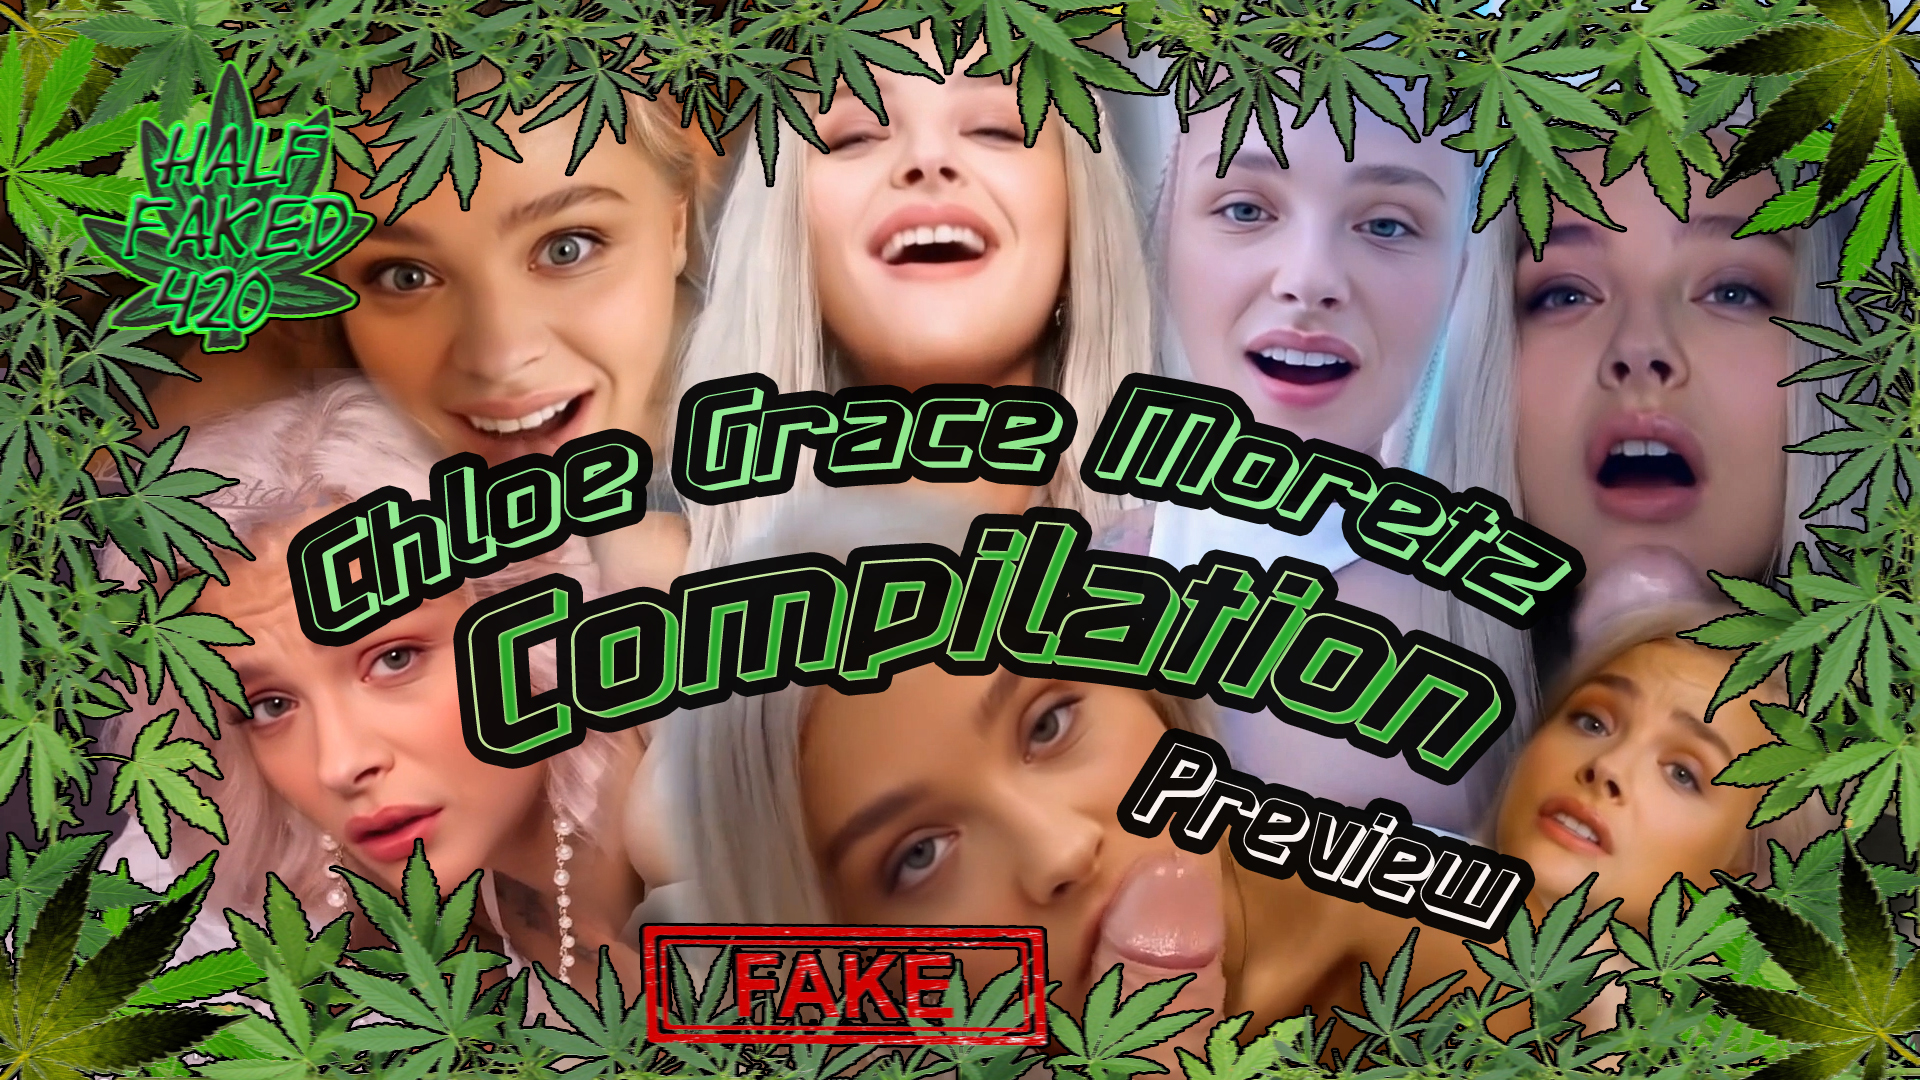 Chloe Grace Moretz - Compilation | PREVIEW (16:42) | FAKE